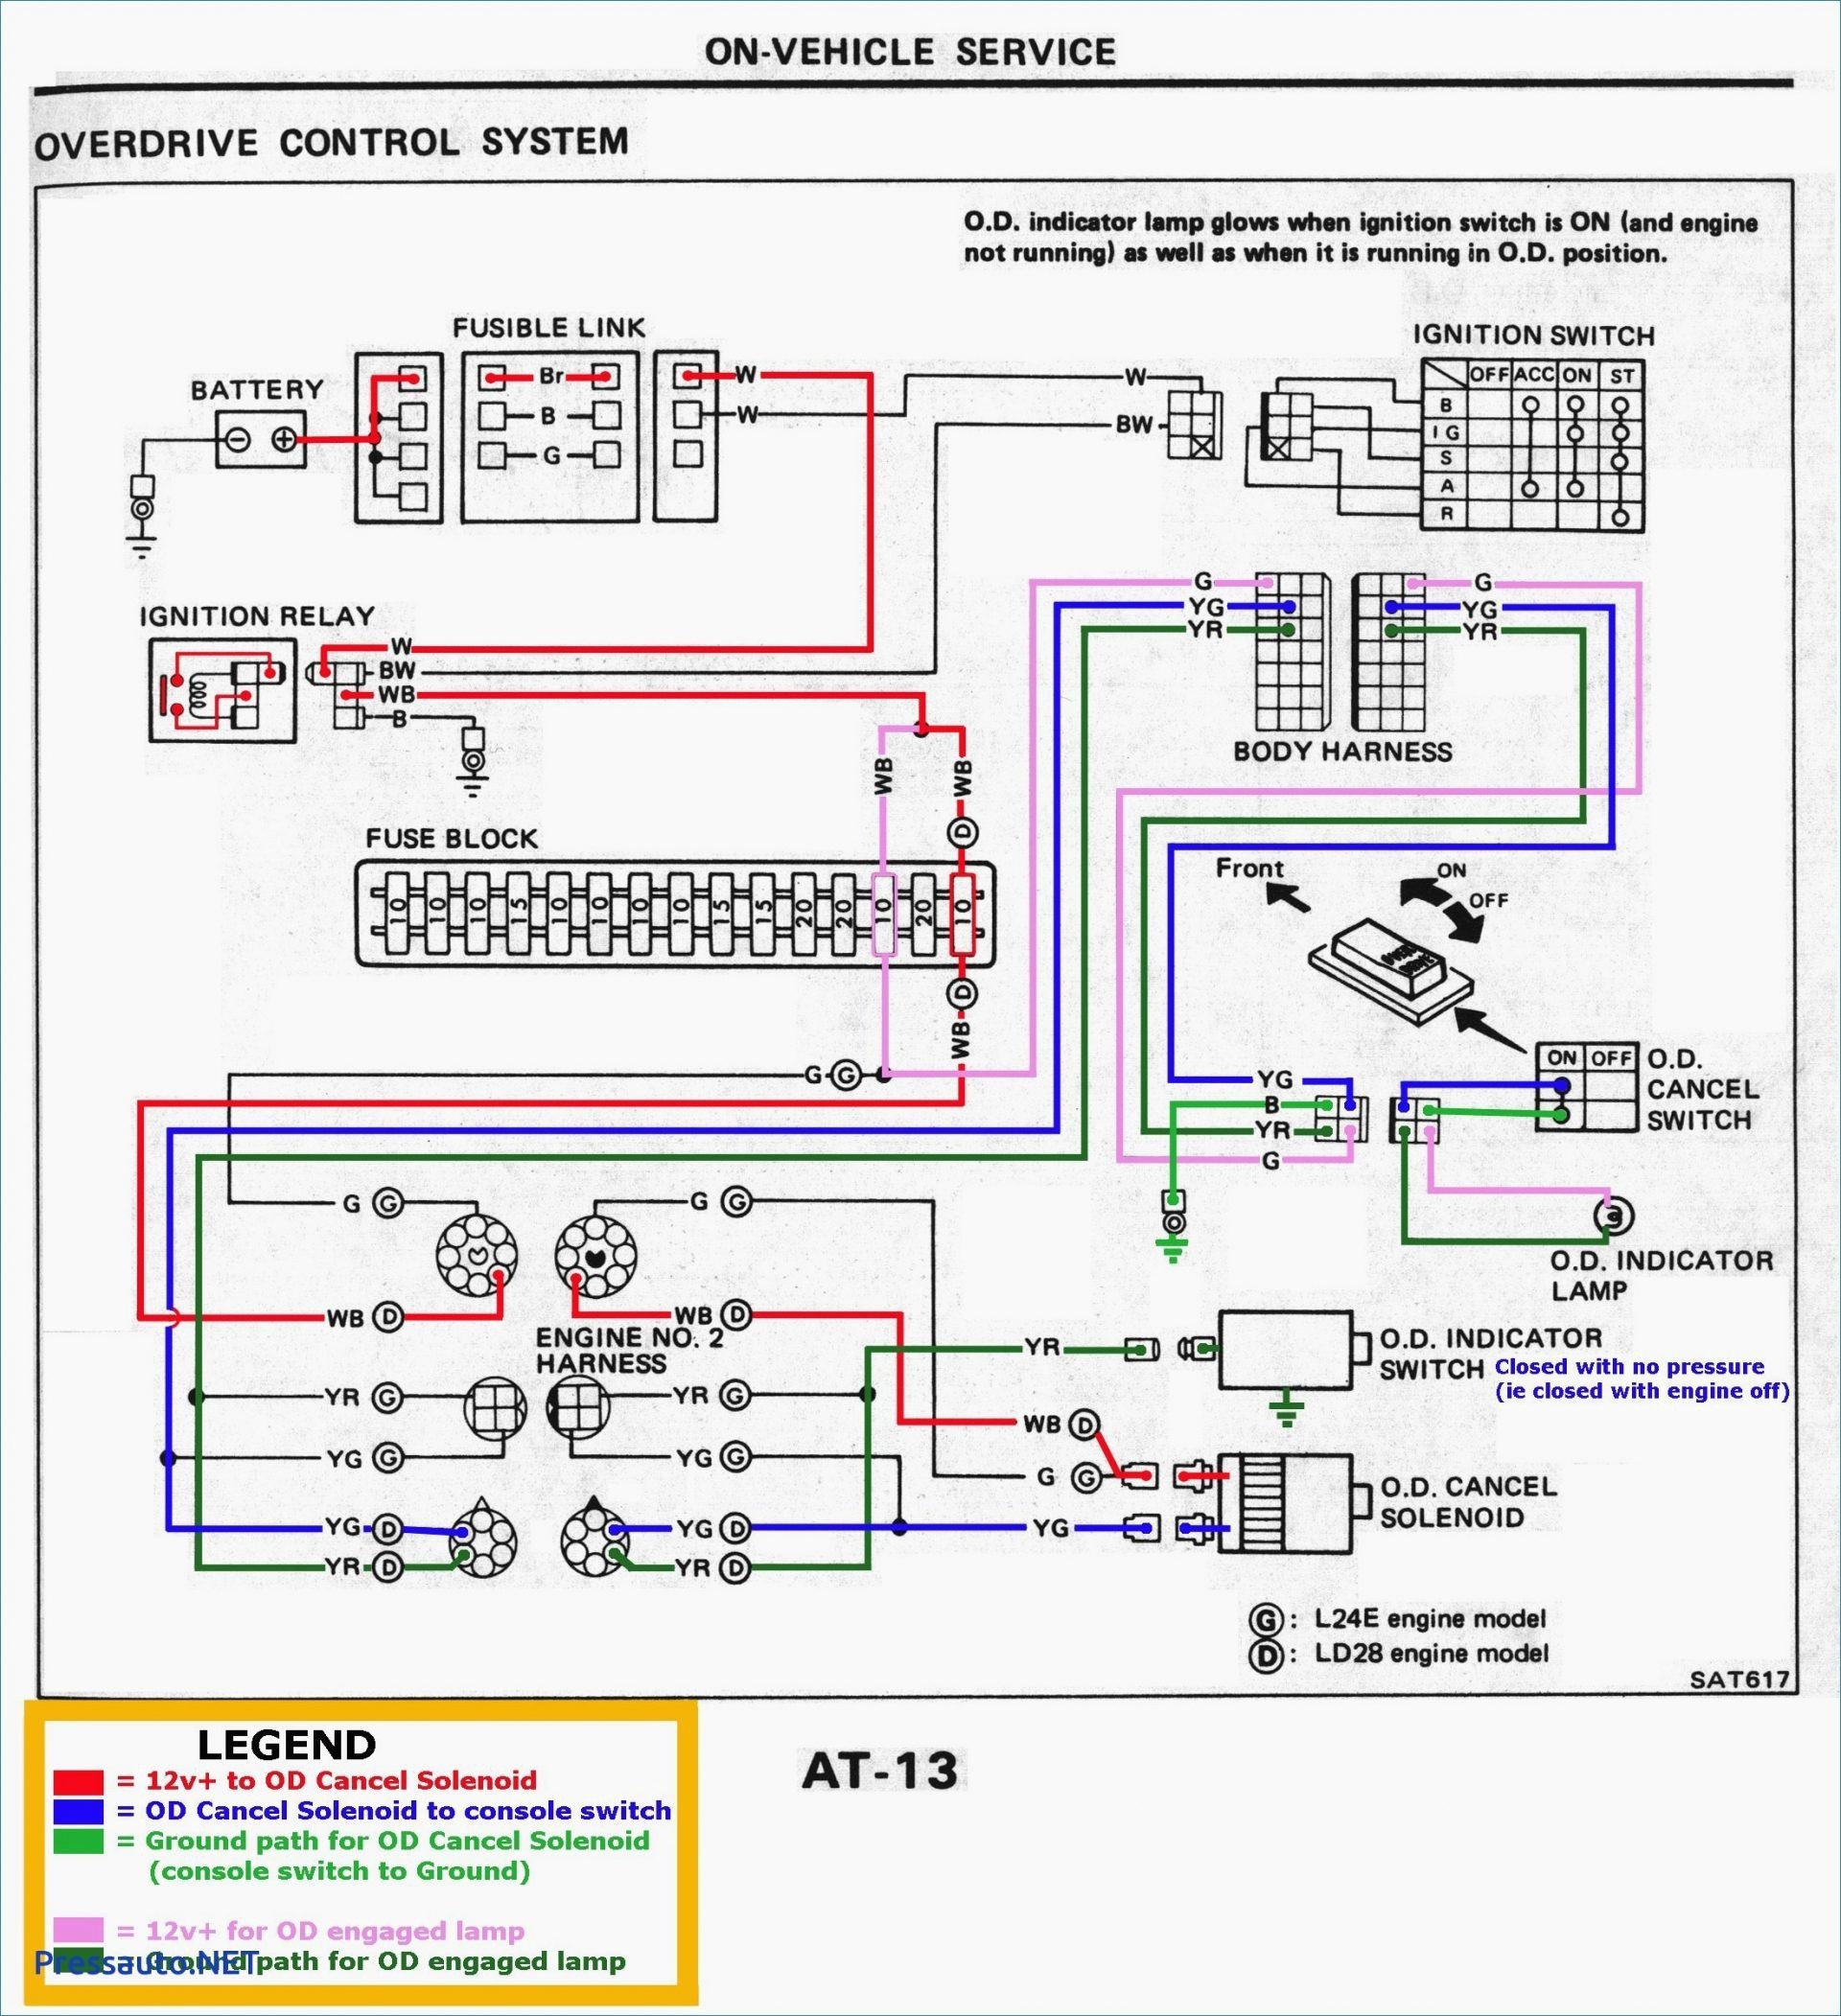 Car Trailer socket Wiring Diagram Trailer Connector Wiring Diagram Print Wiring Diagram Car Trailer Of Car Trailer socket Wiring Diagram